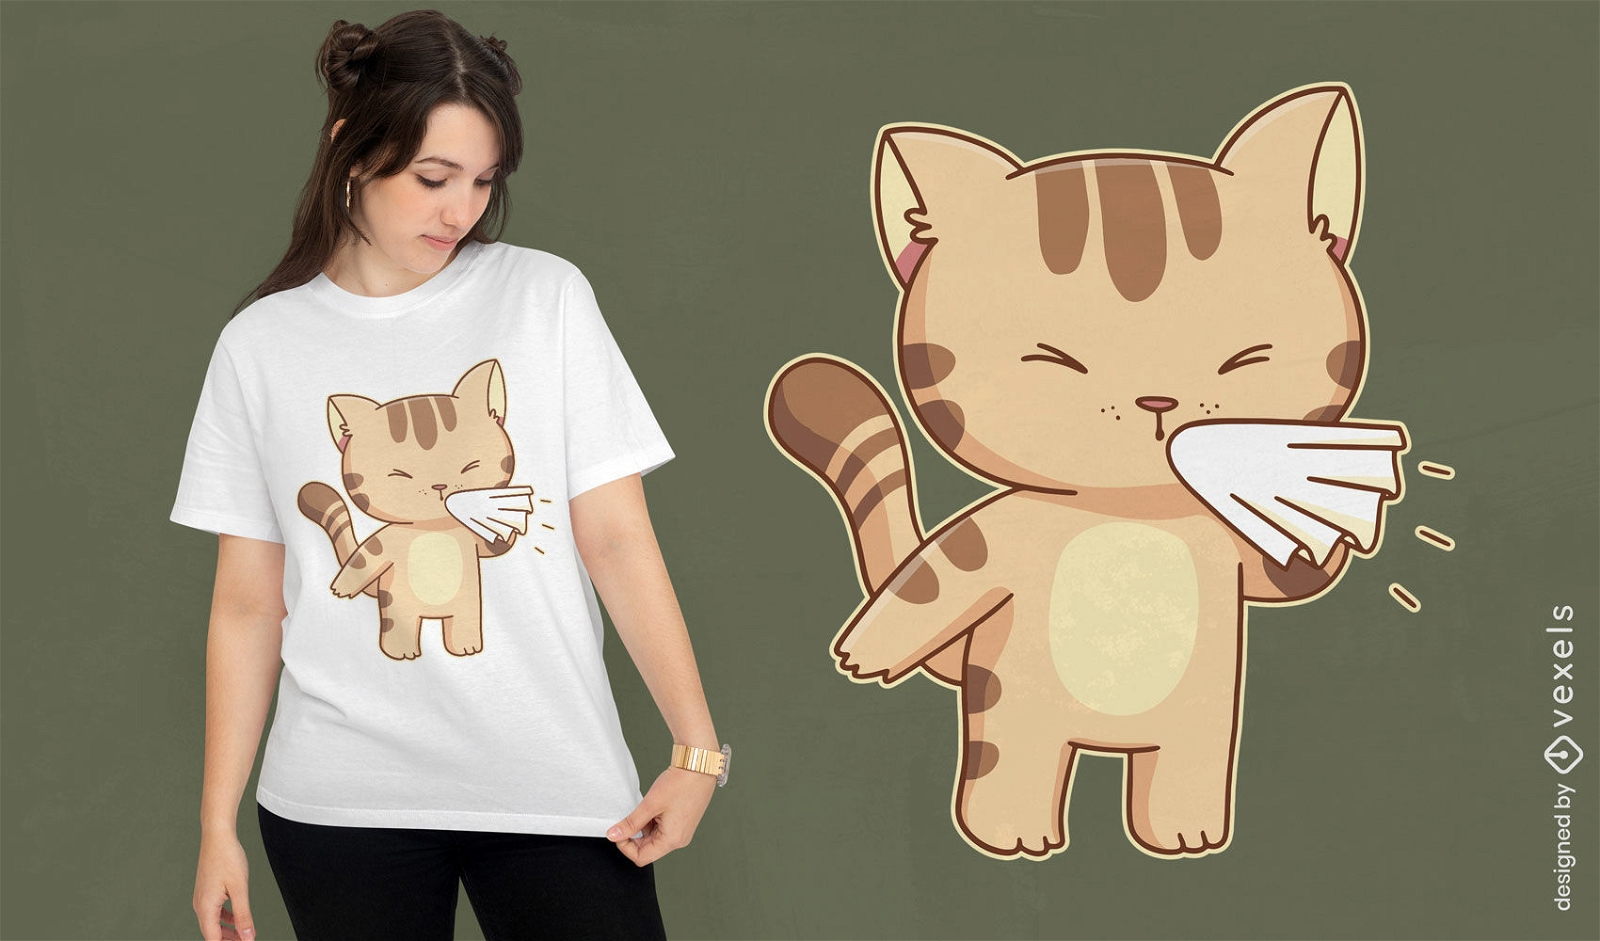 Sneezing cat character t-shirt design